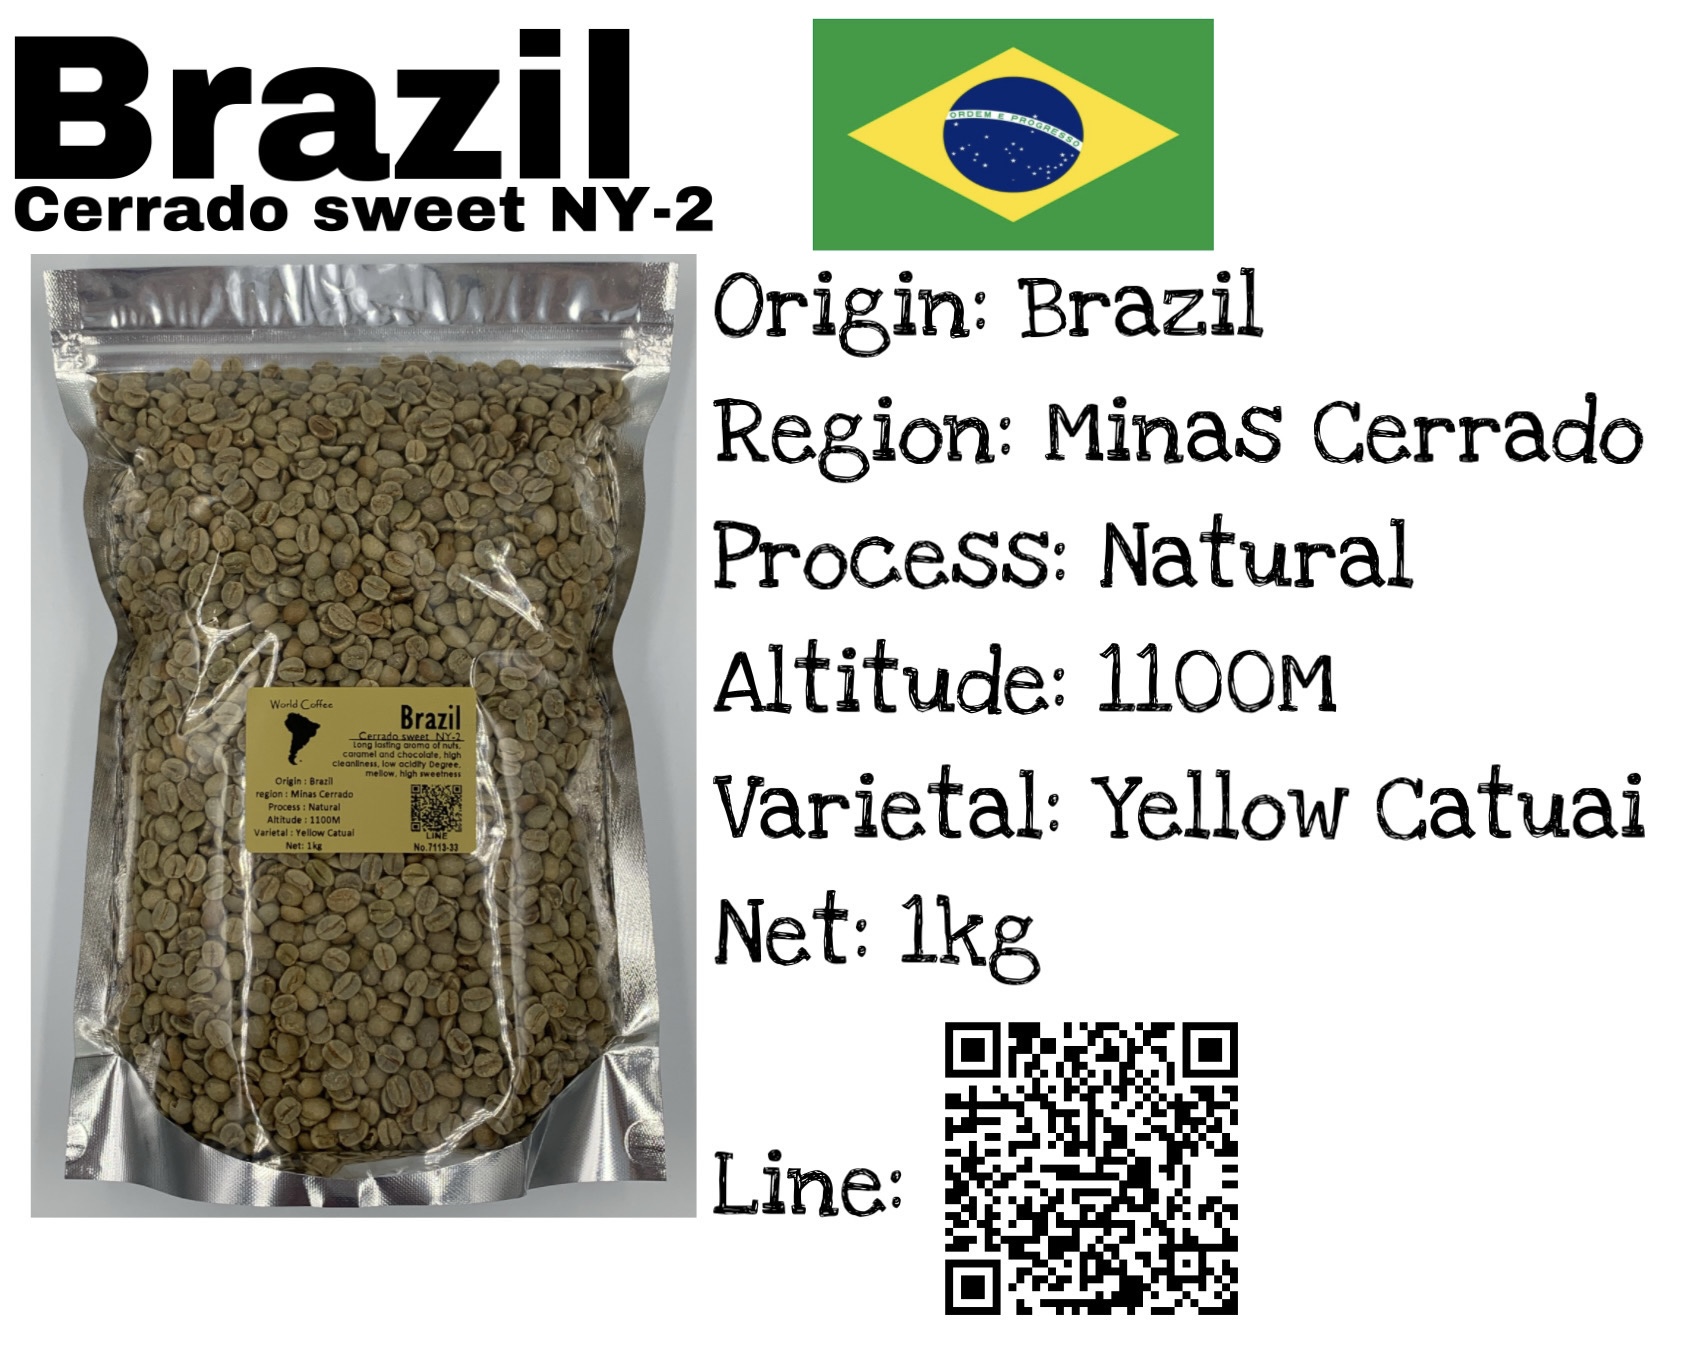 *NEW* พร้อมส่ง เมล็ดกาแฟดิบ Premium Brazil Cerrado Sweet NY-2 Natural process ขนาด 1kg. / เมล็ดกาแฟนอก/เมล็ดกาแฟสารบราซิล/  Brazil Cerrado NY-2 green beans 1kg